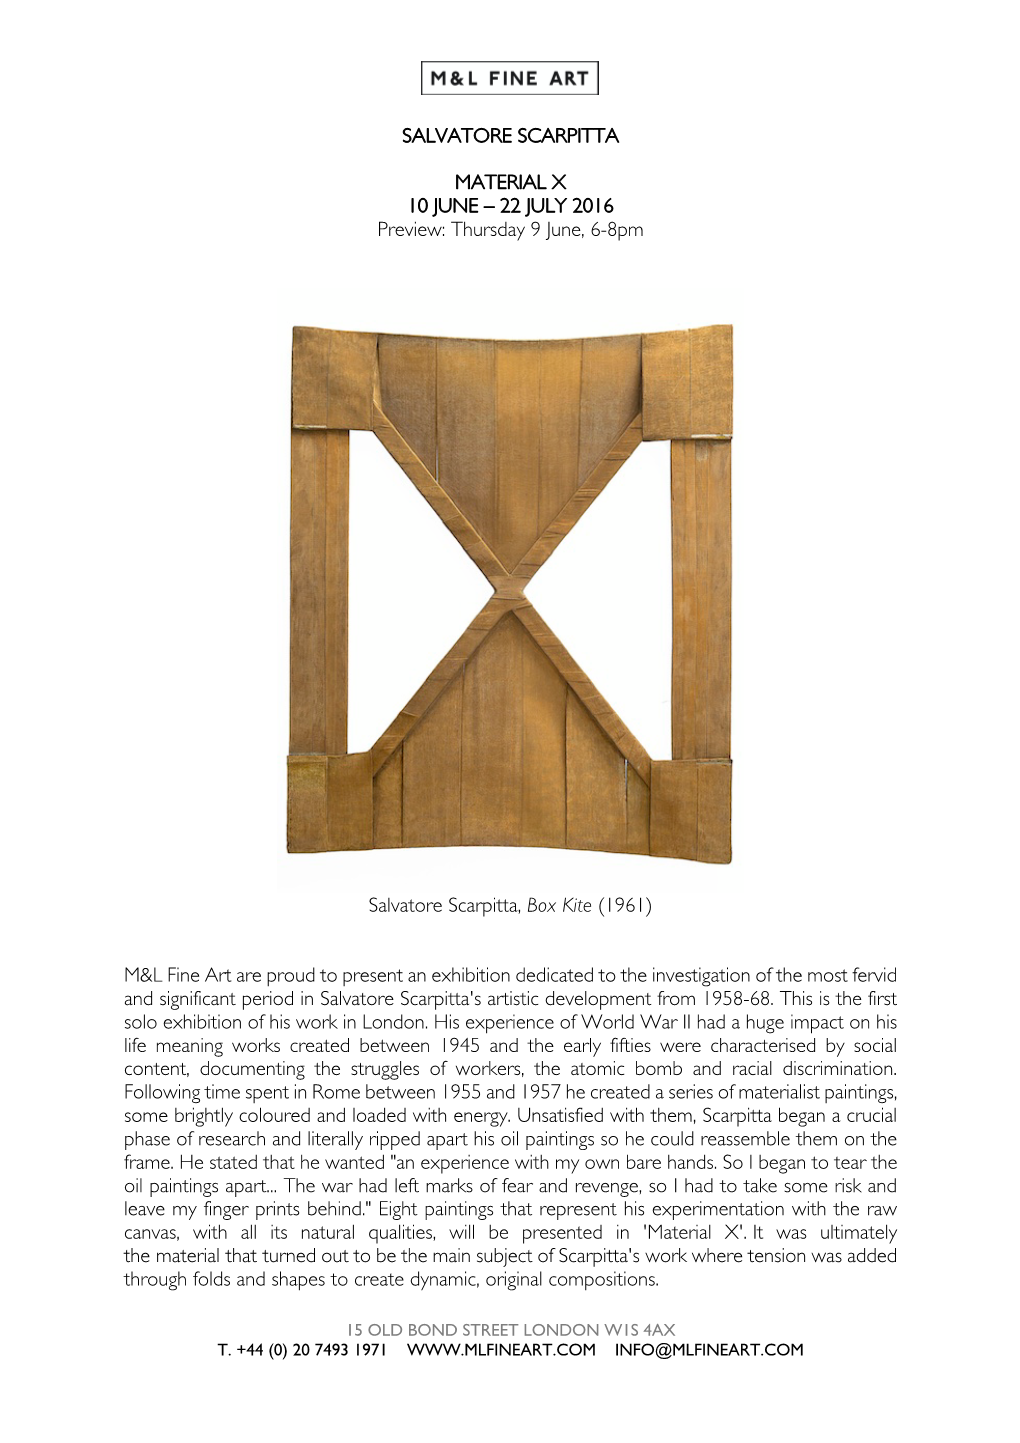 Preview: Thursday 9 June, 6-8Pm Salvatore Scarpitta, Box Kite (1961) M&L Fine Art Are Proud to Present an Exhibition Dedicat